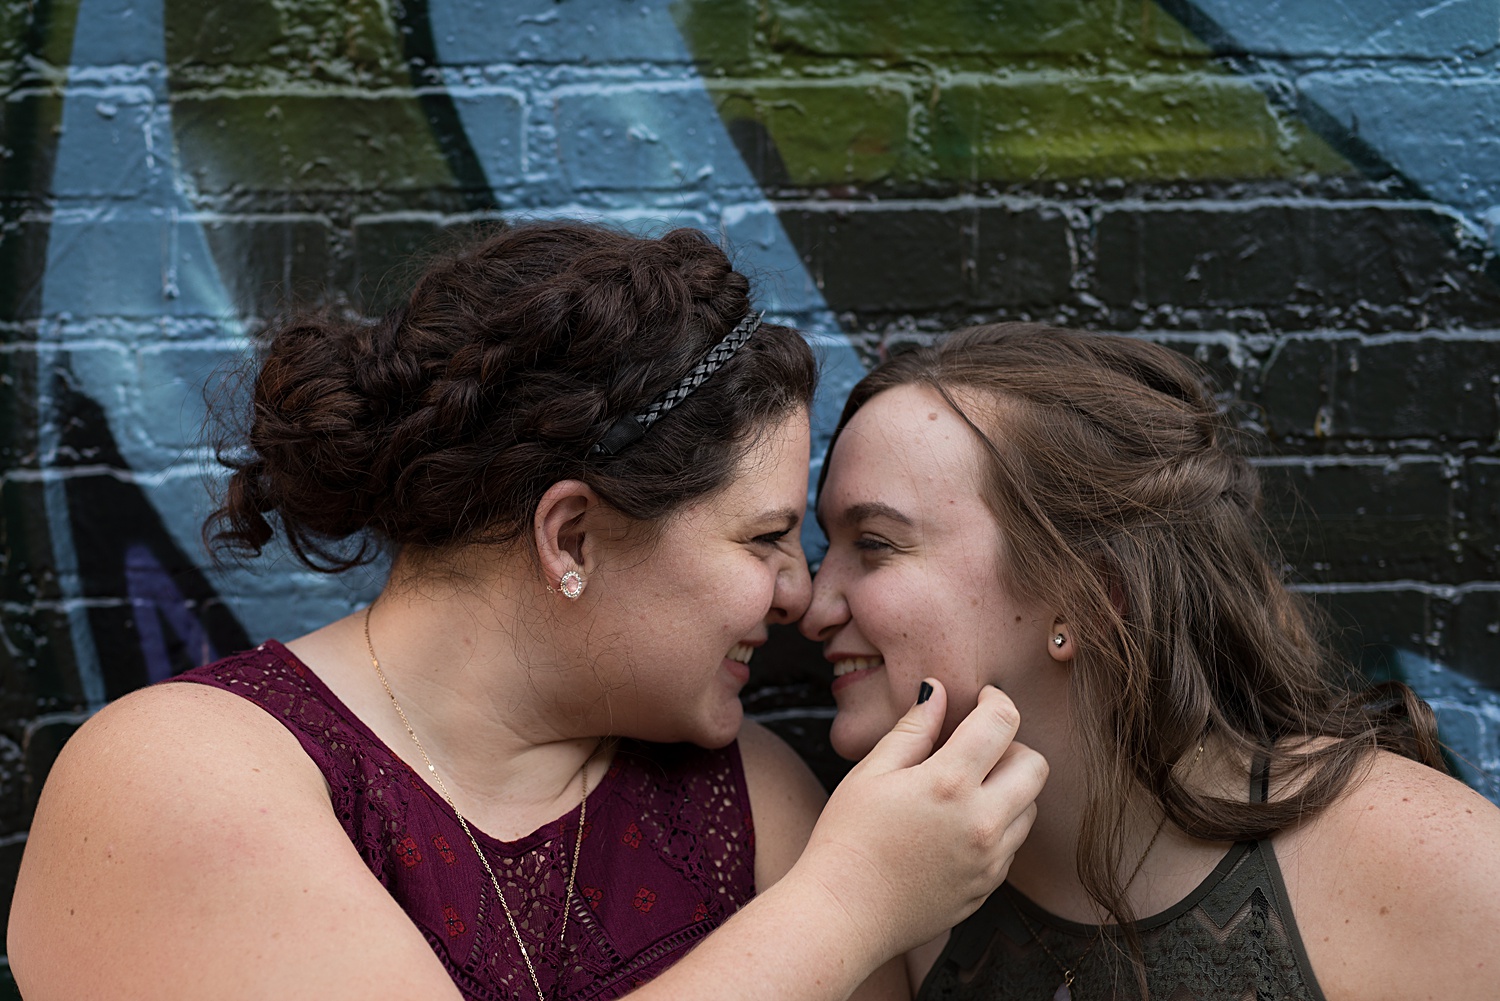 Same-Sex-Engagement-Photos-LGBT-friendly-KC-Engagement-Photographer-Emily-Lynn-Photography